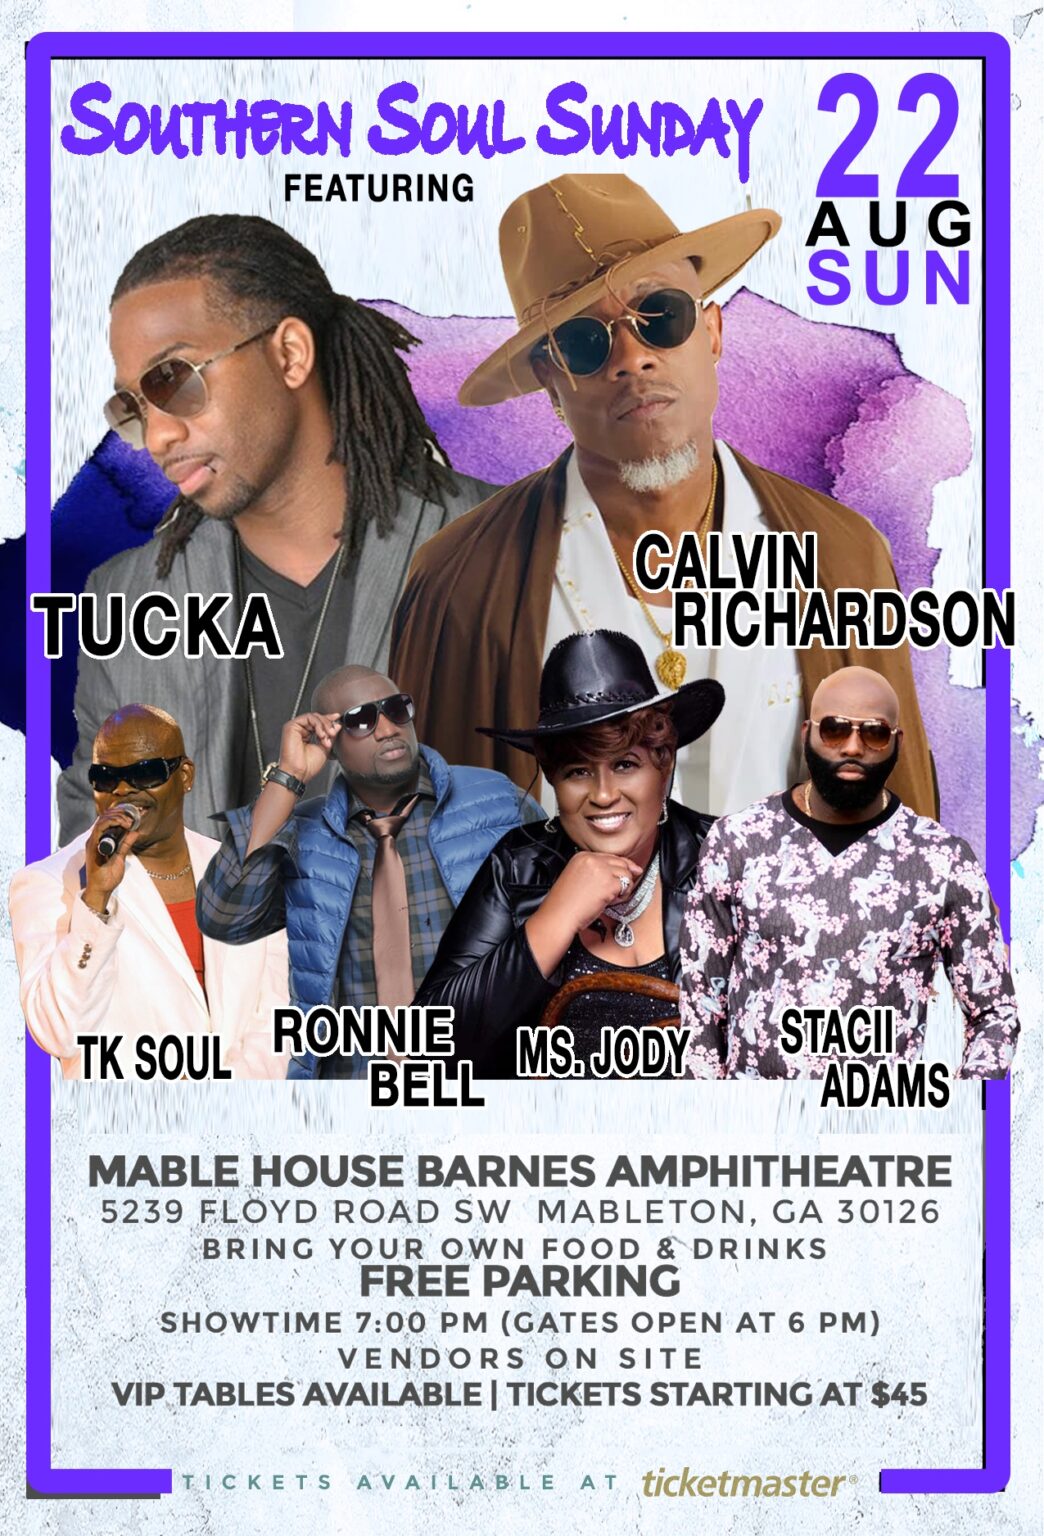 Southern Soul Sunday Tucka, Calvin Richardson, T.K. Soul 9 Entertainment